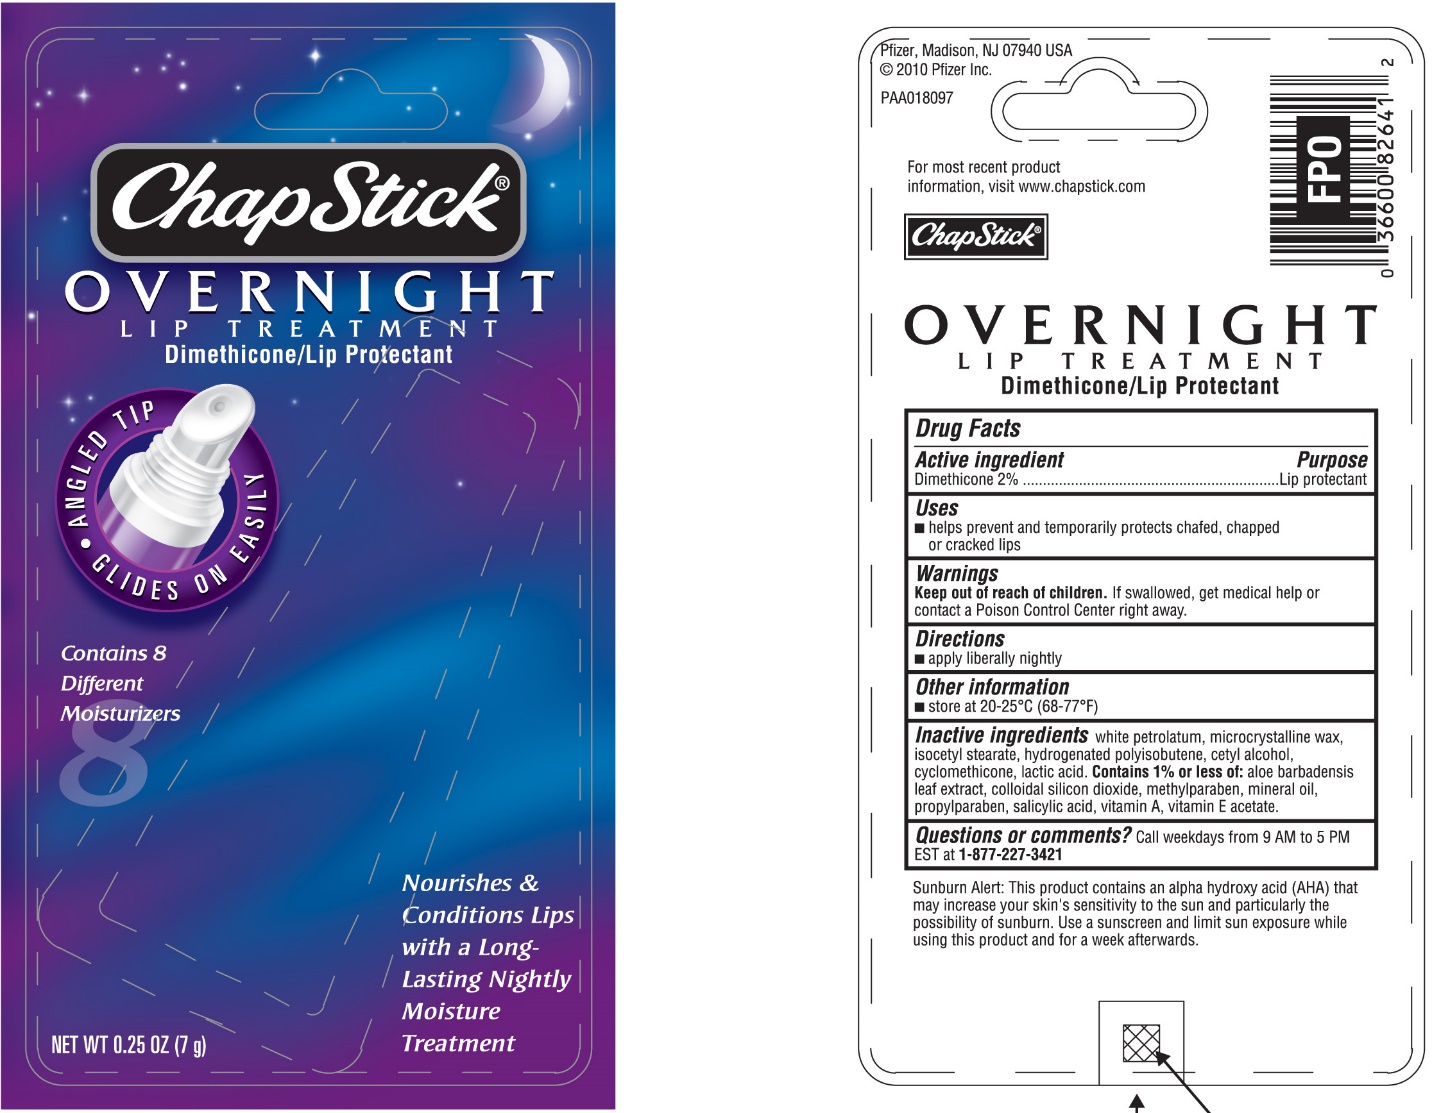 ChapStick Overnight Lip Treatment Packaging